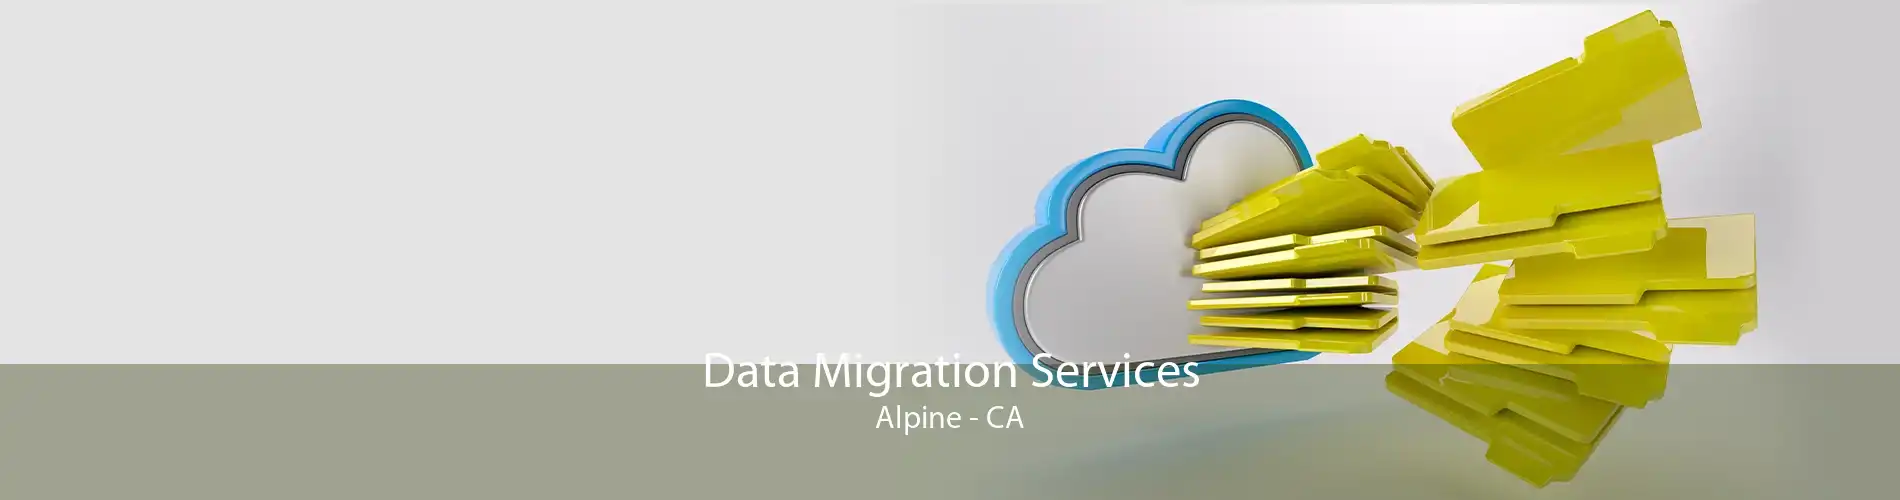 Data Migration Services Alpine - CA